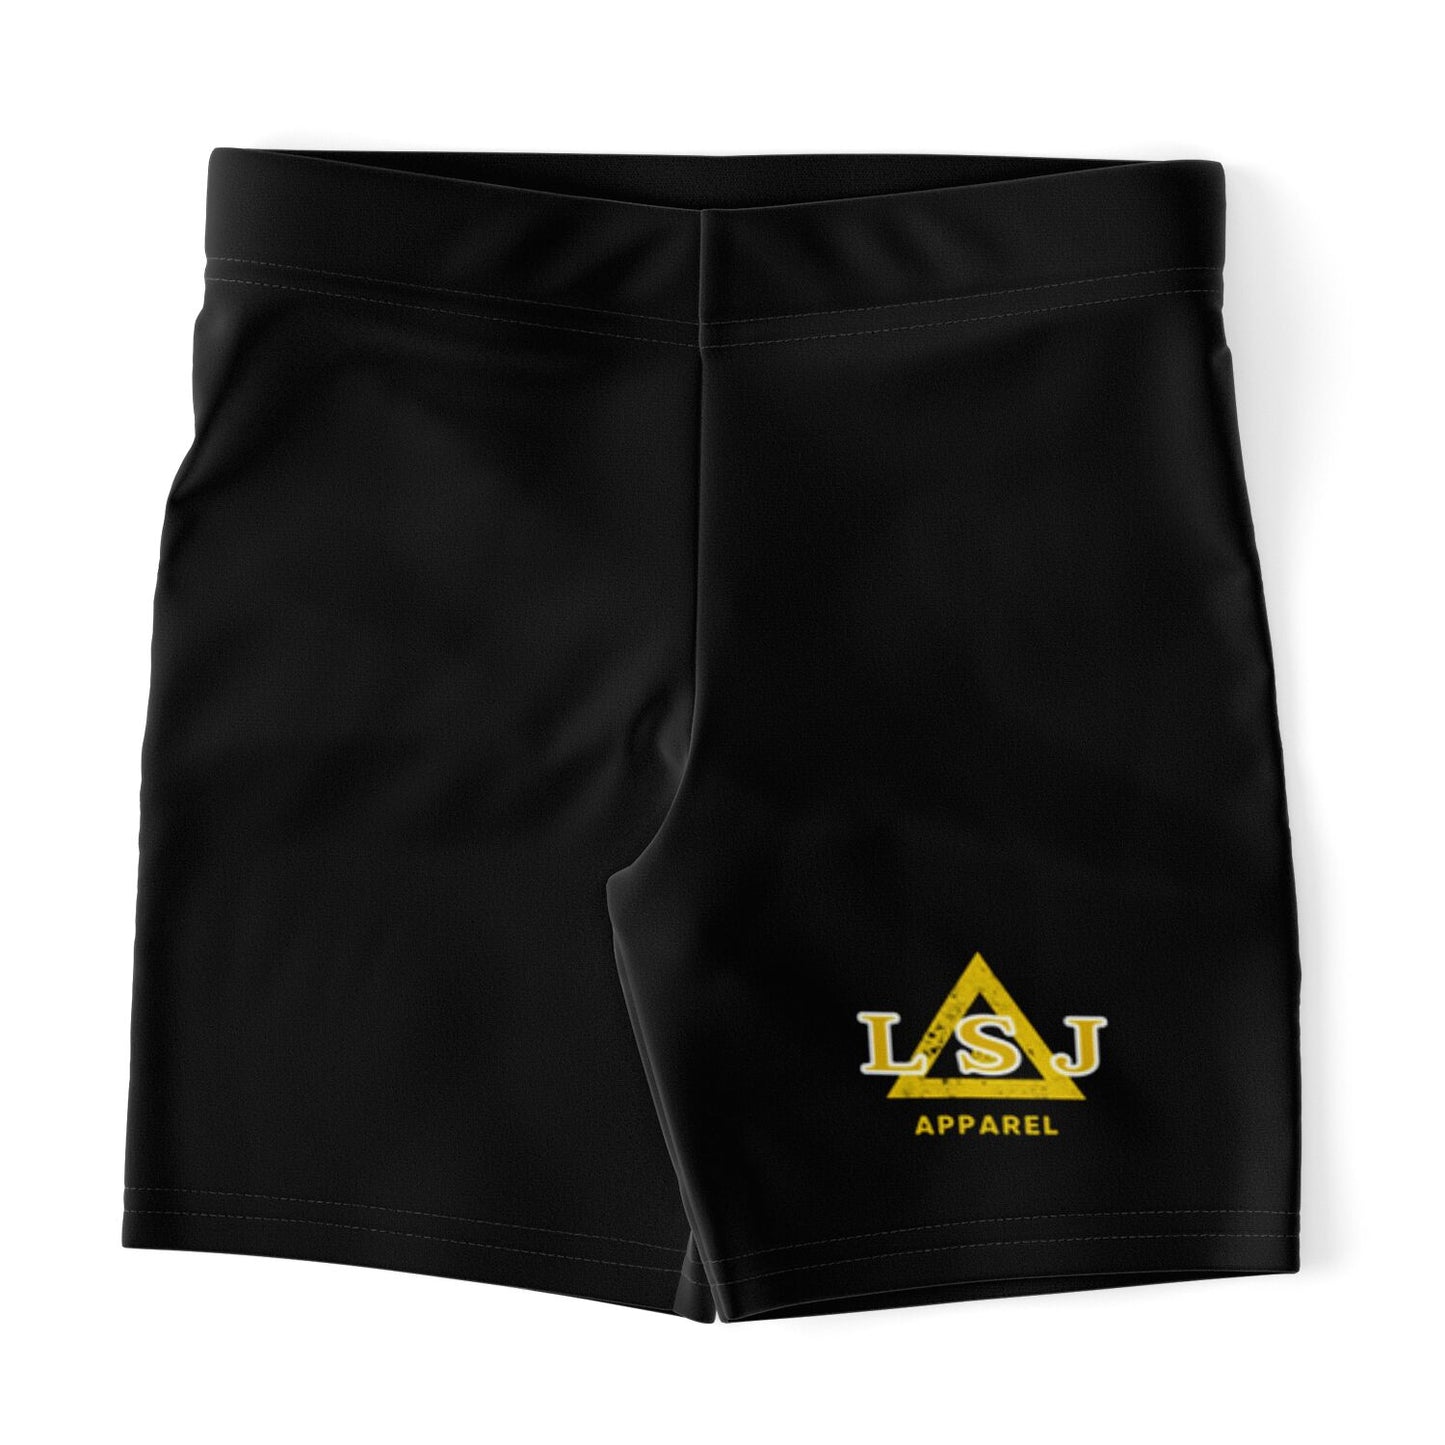 LSJ Black Sports Bra & Legging Short Set